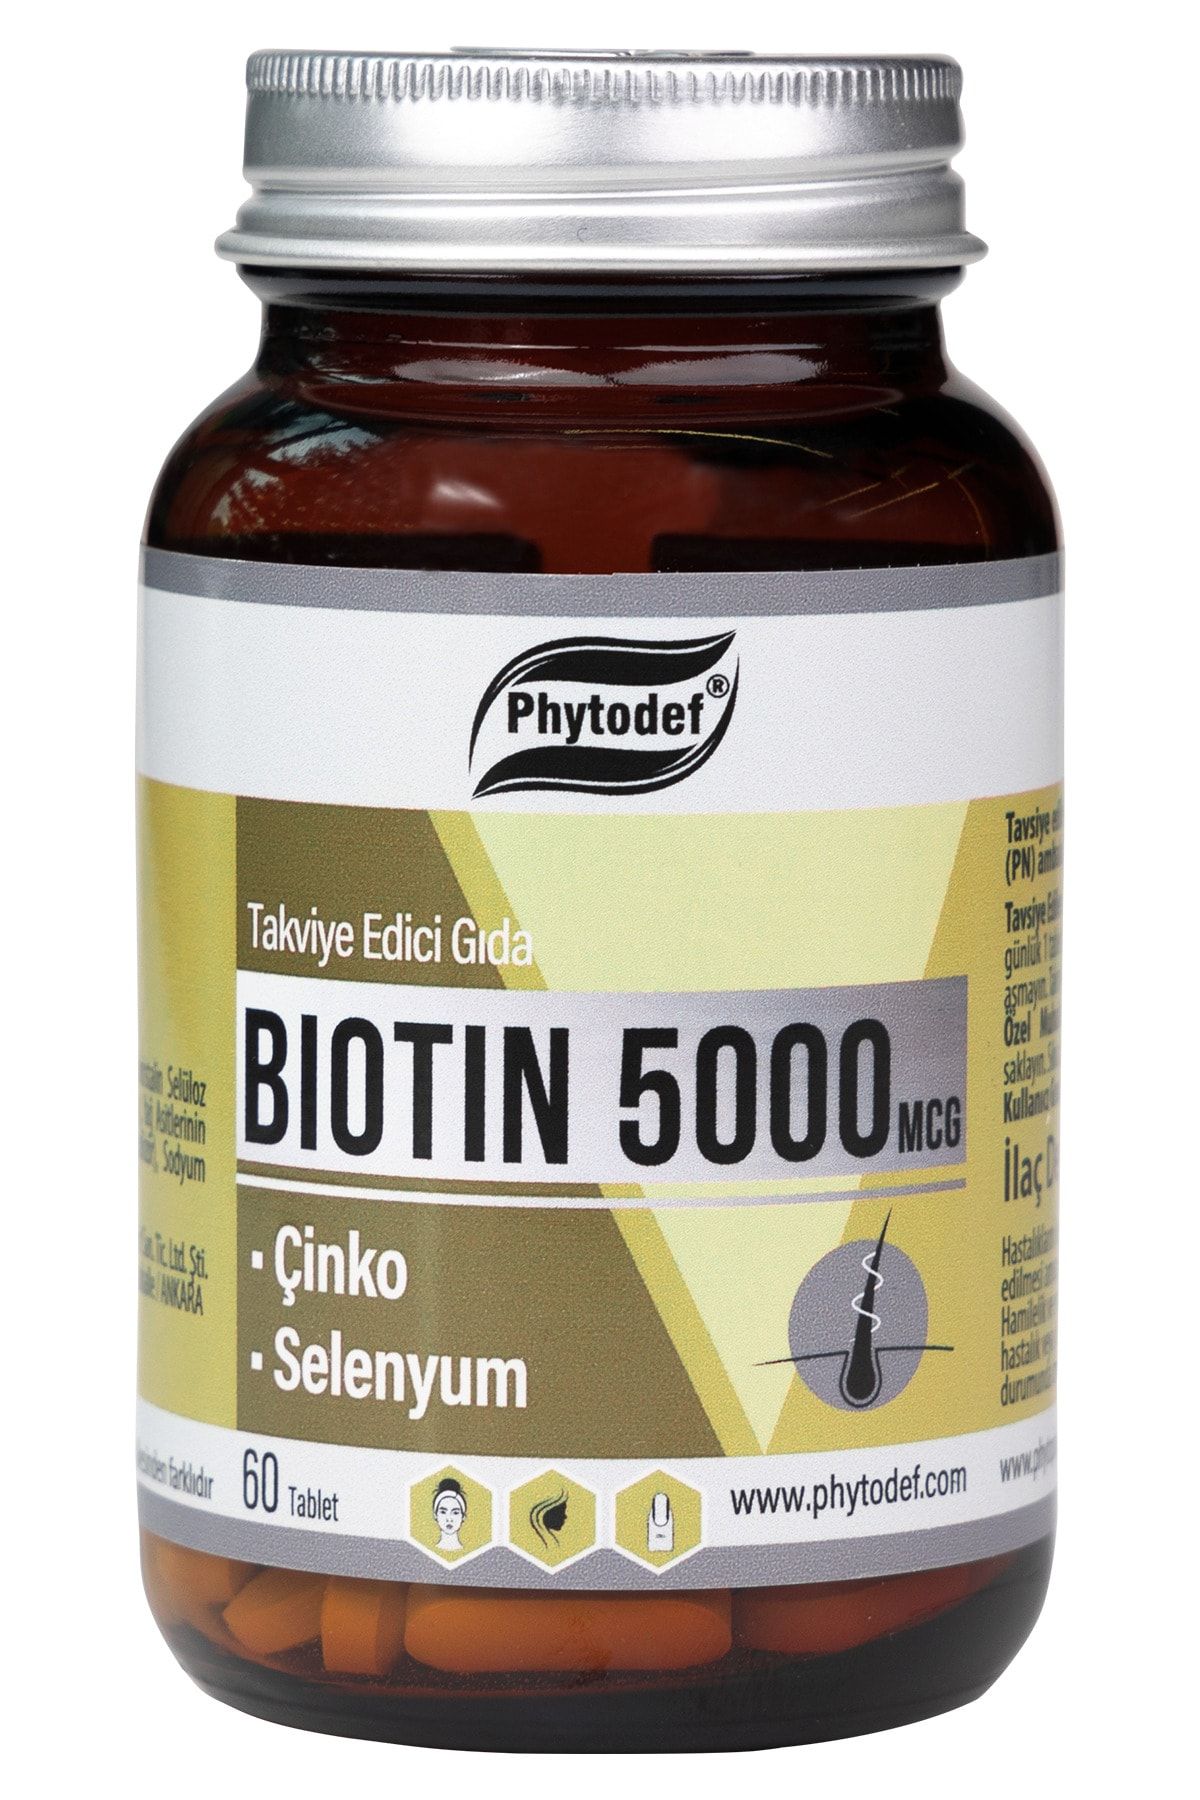 Phytodef Biotin 5000 Mcg - 60 Tablet